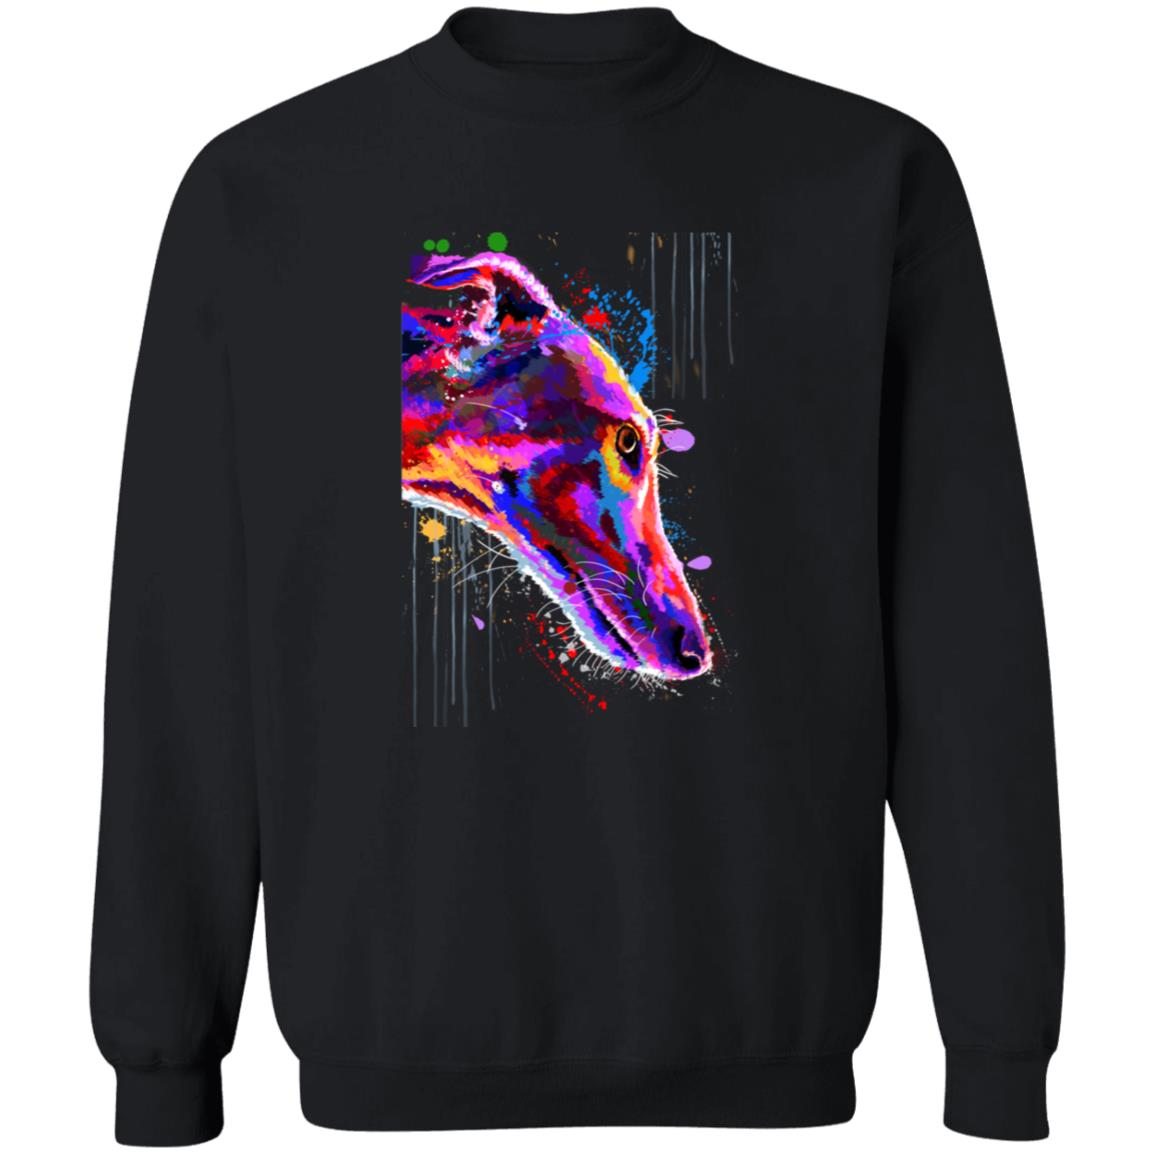 Abstract Greyhound dog Unisex Crewneck Sweatshirt with expressive splashes-Family-Gift-Planet